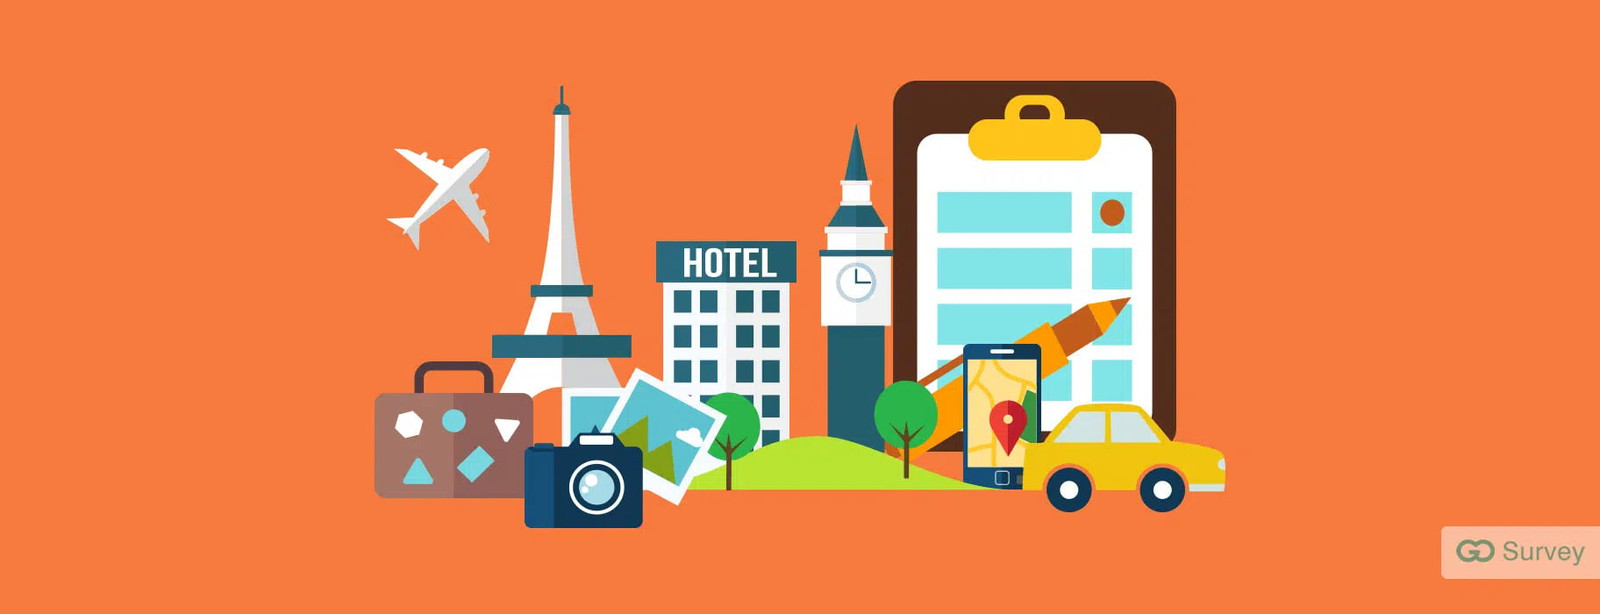 Digital marketing for hospitality industry